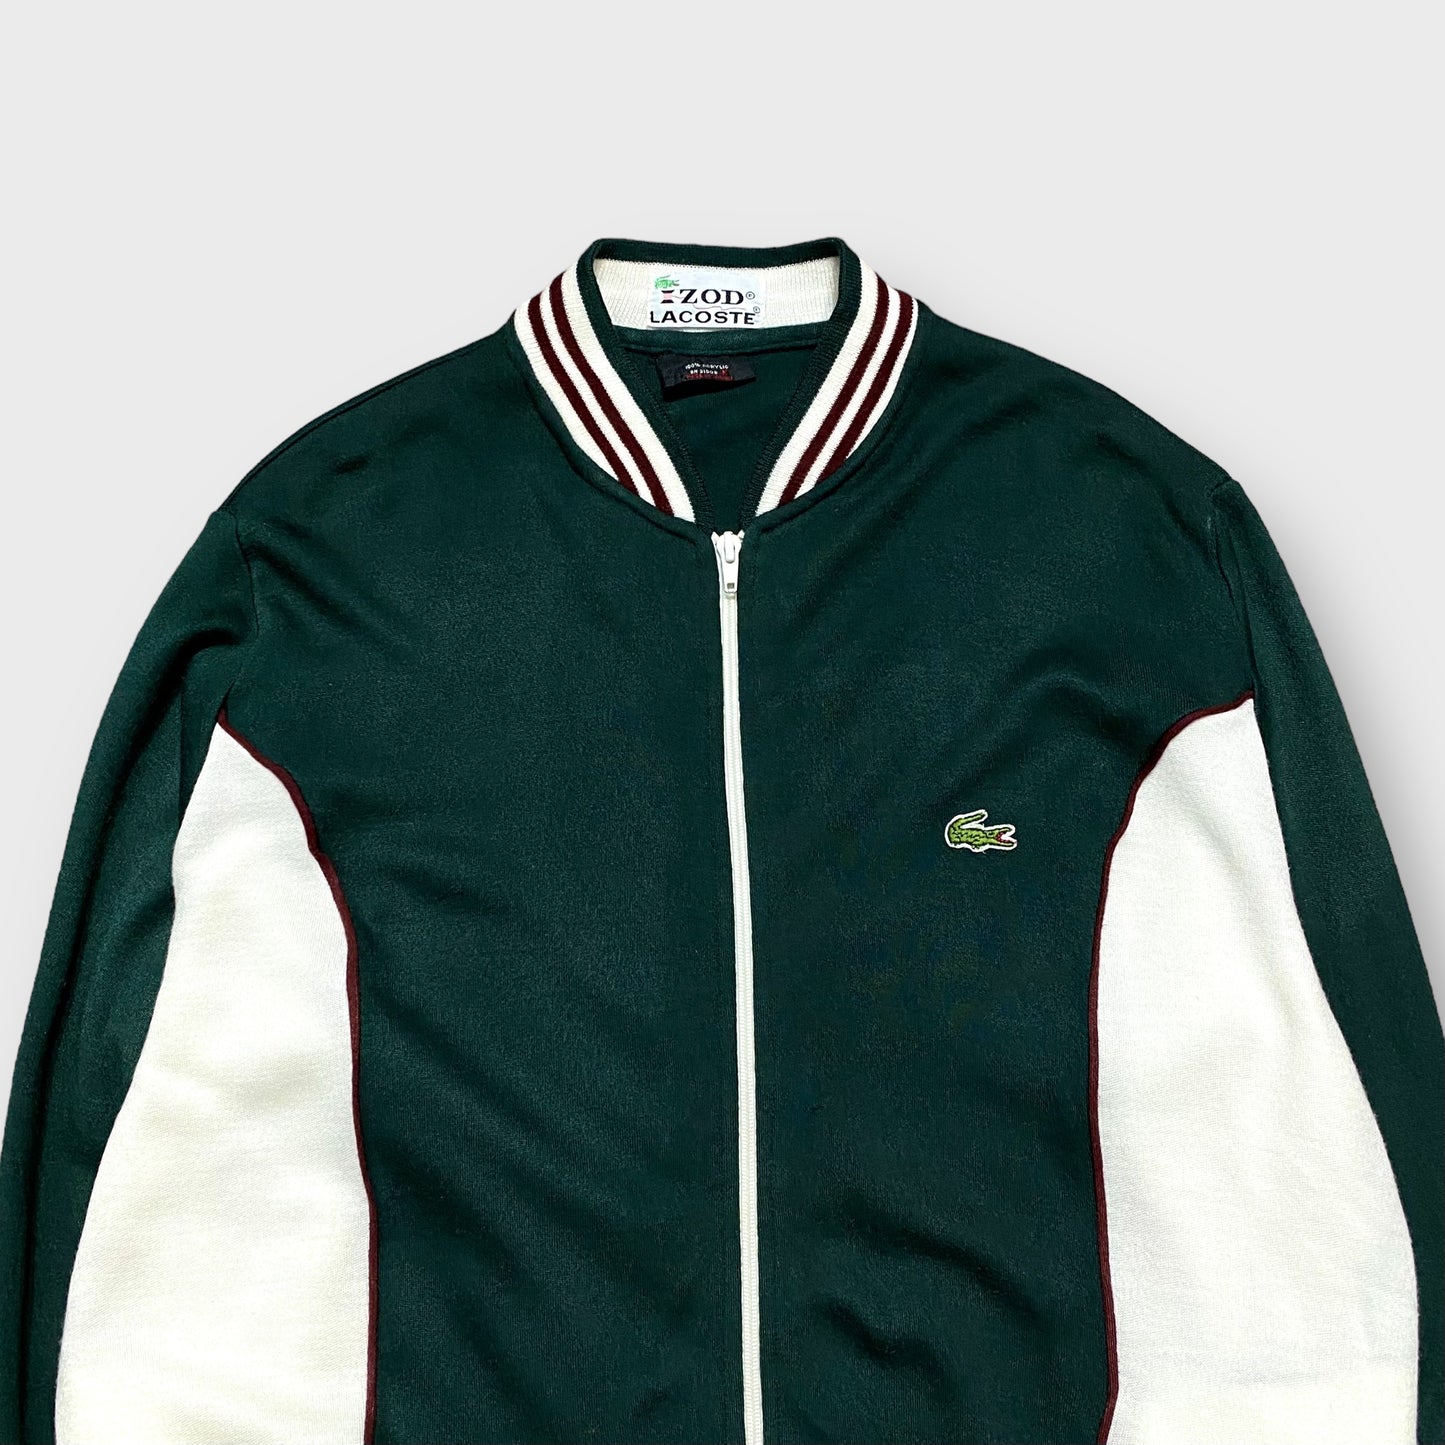 70-80's "IZOD LACOSTE" Cotton track jacket